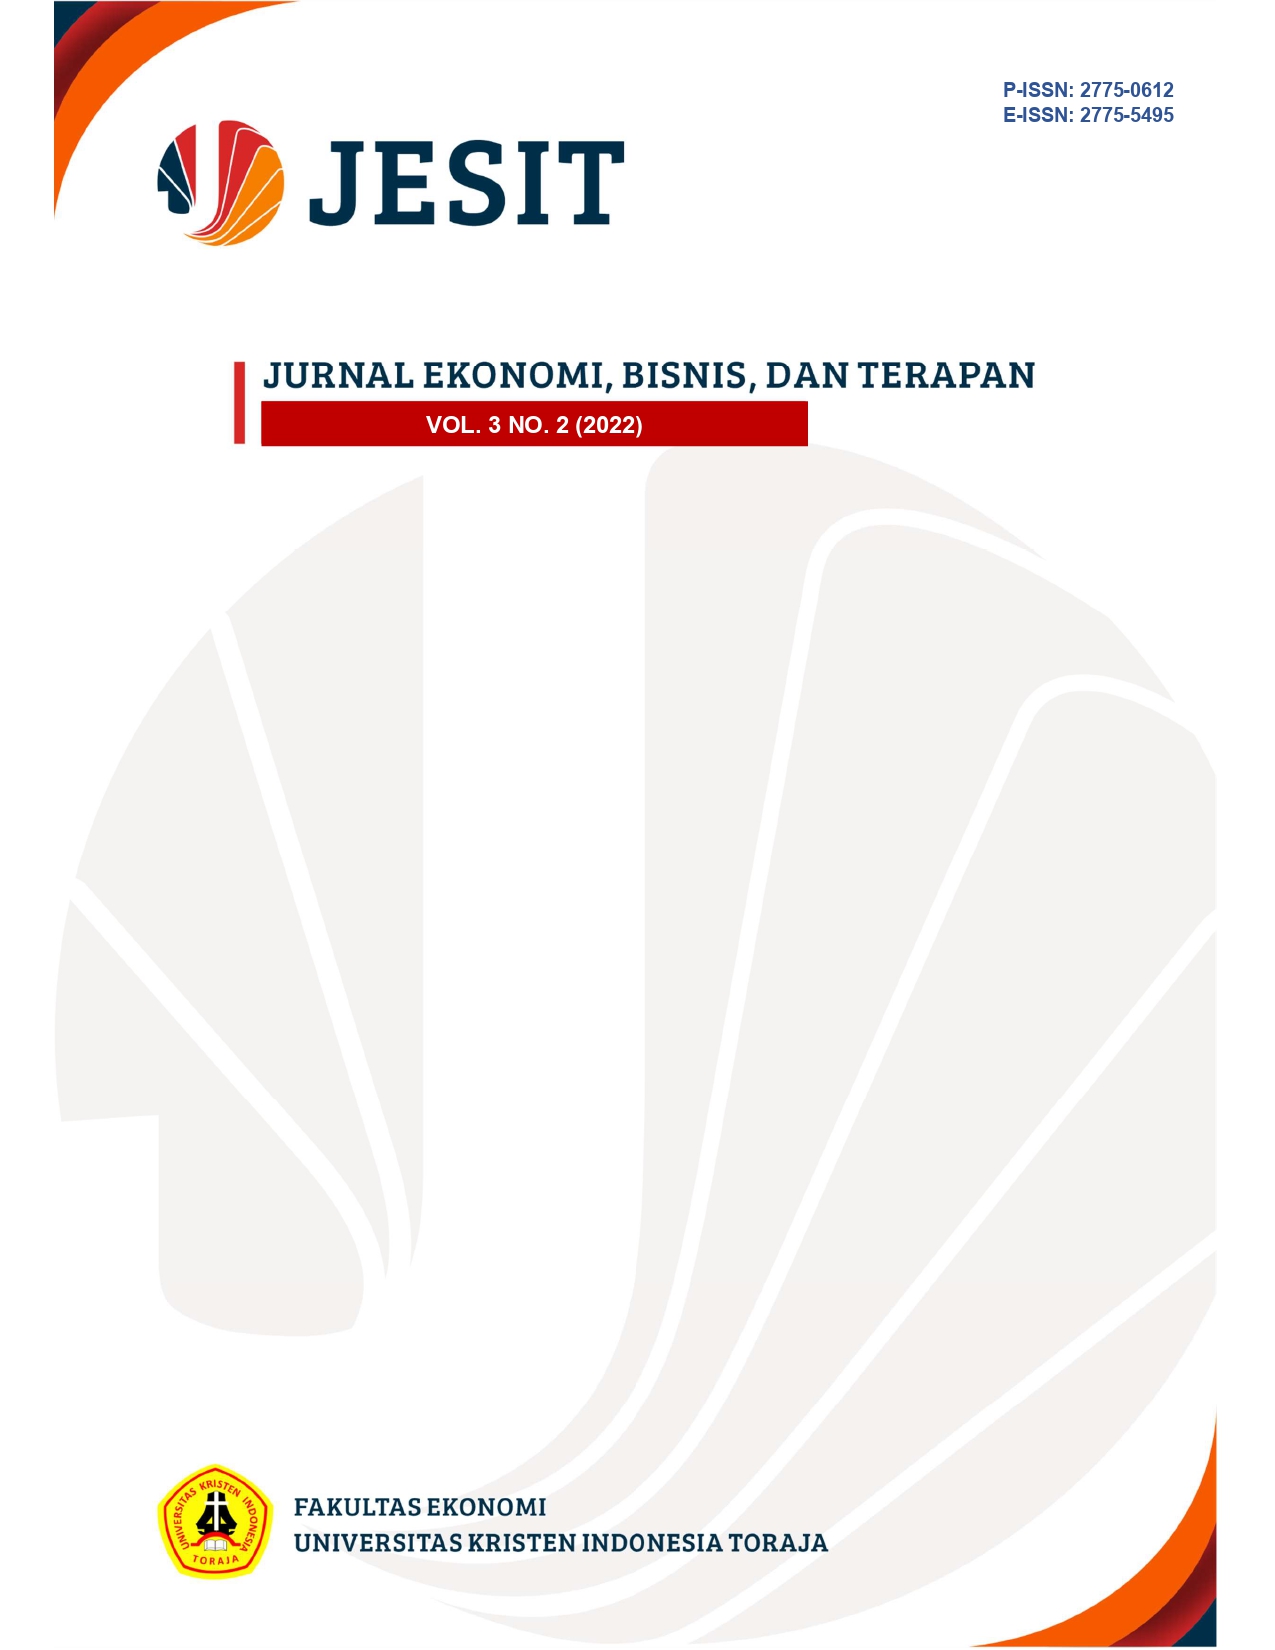 					View Vol. 3 No. 2 (2022): Jurnal Ekonomi, Bisnis dan Terapan (JESIT)
				